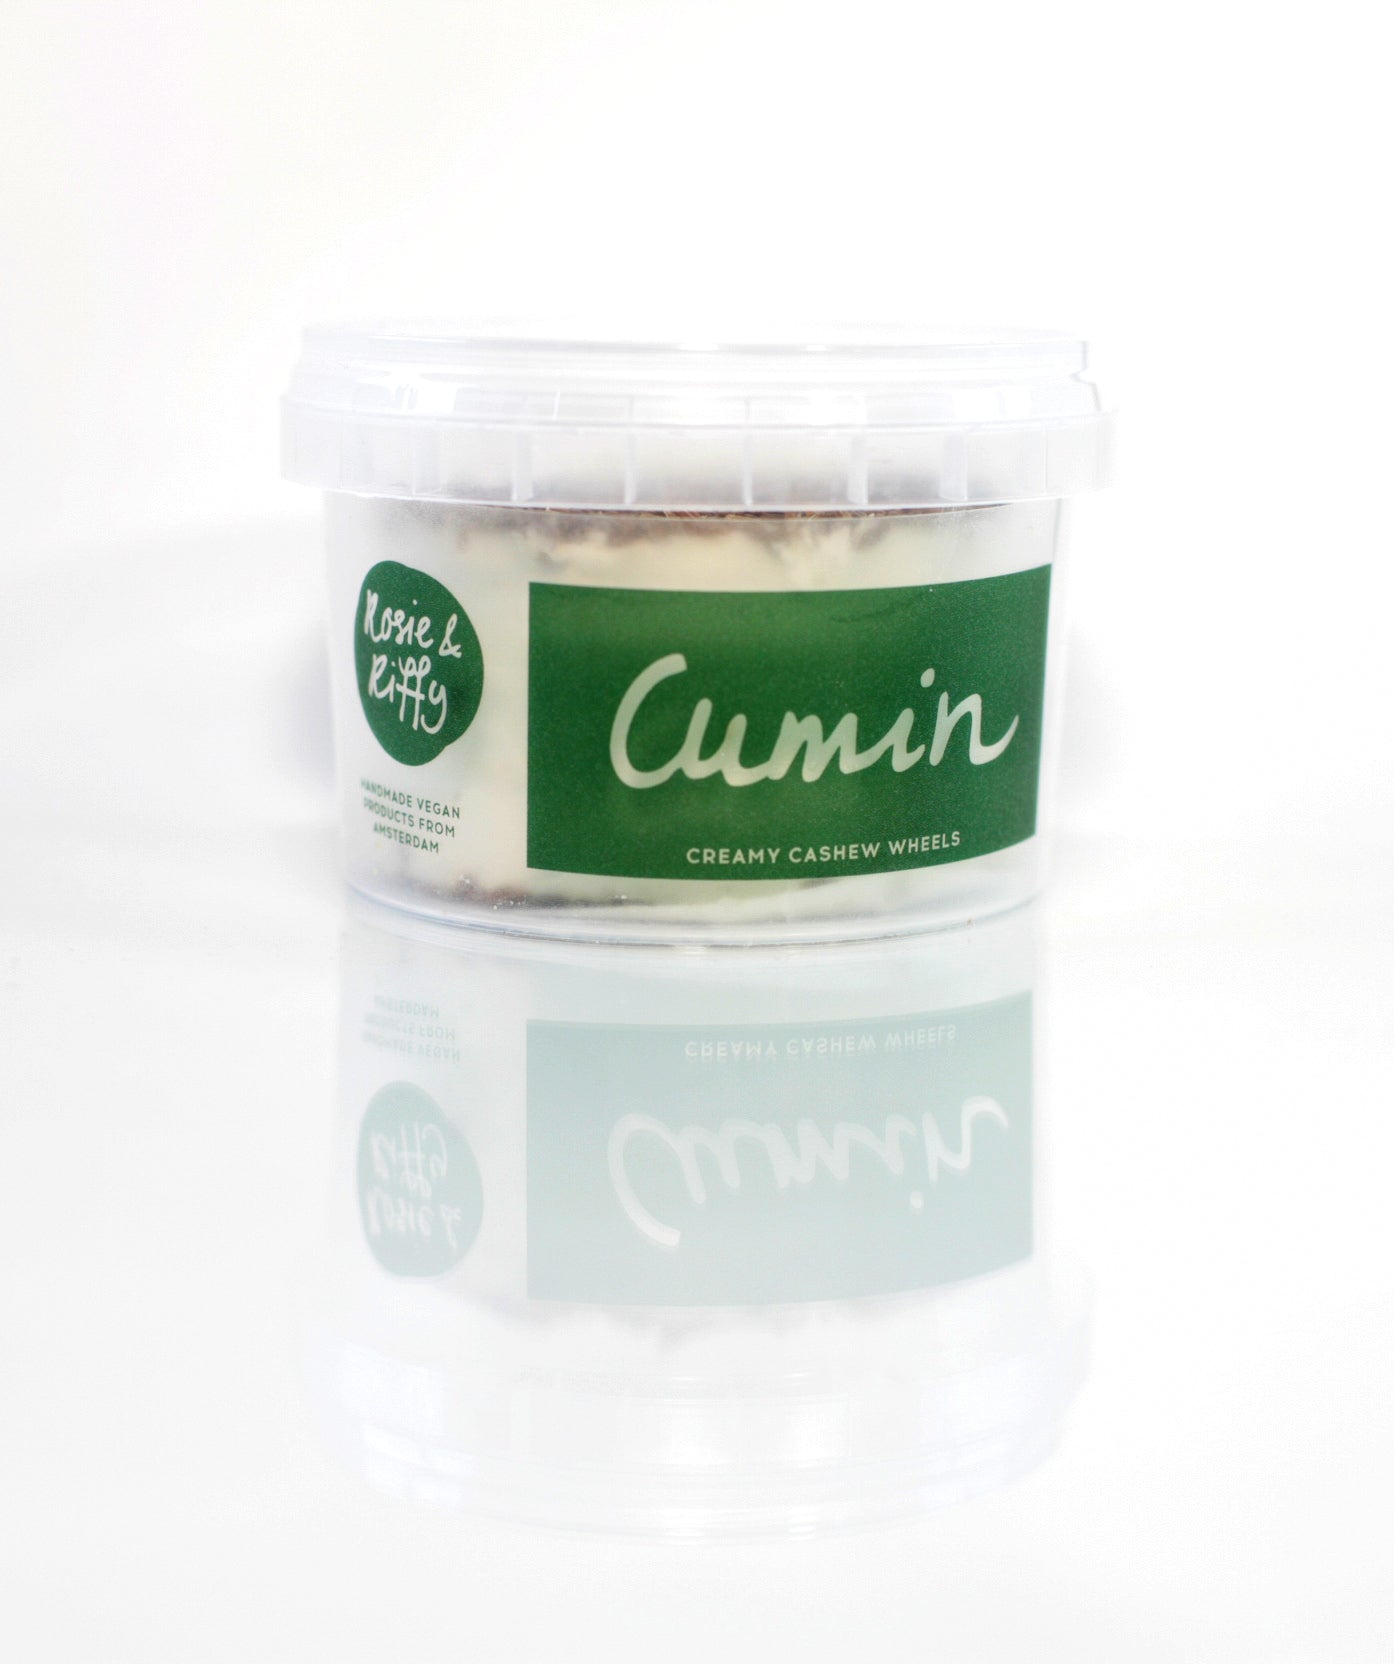 Creamy Cashew Wheels – Cumin